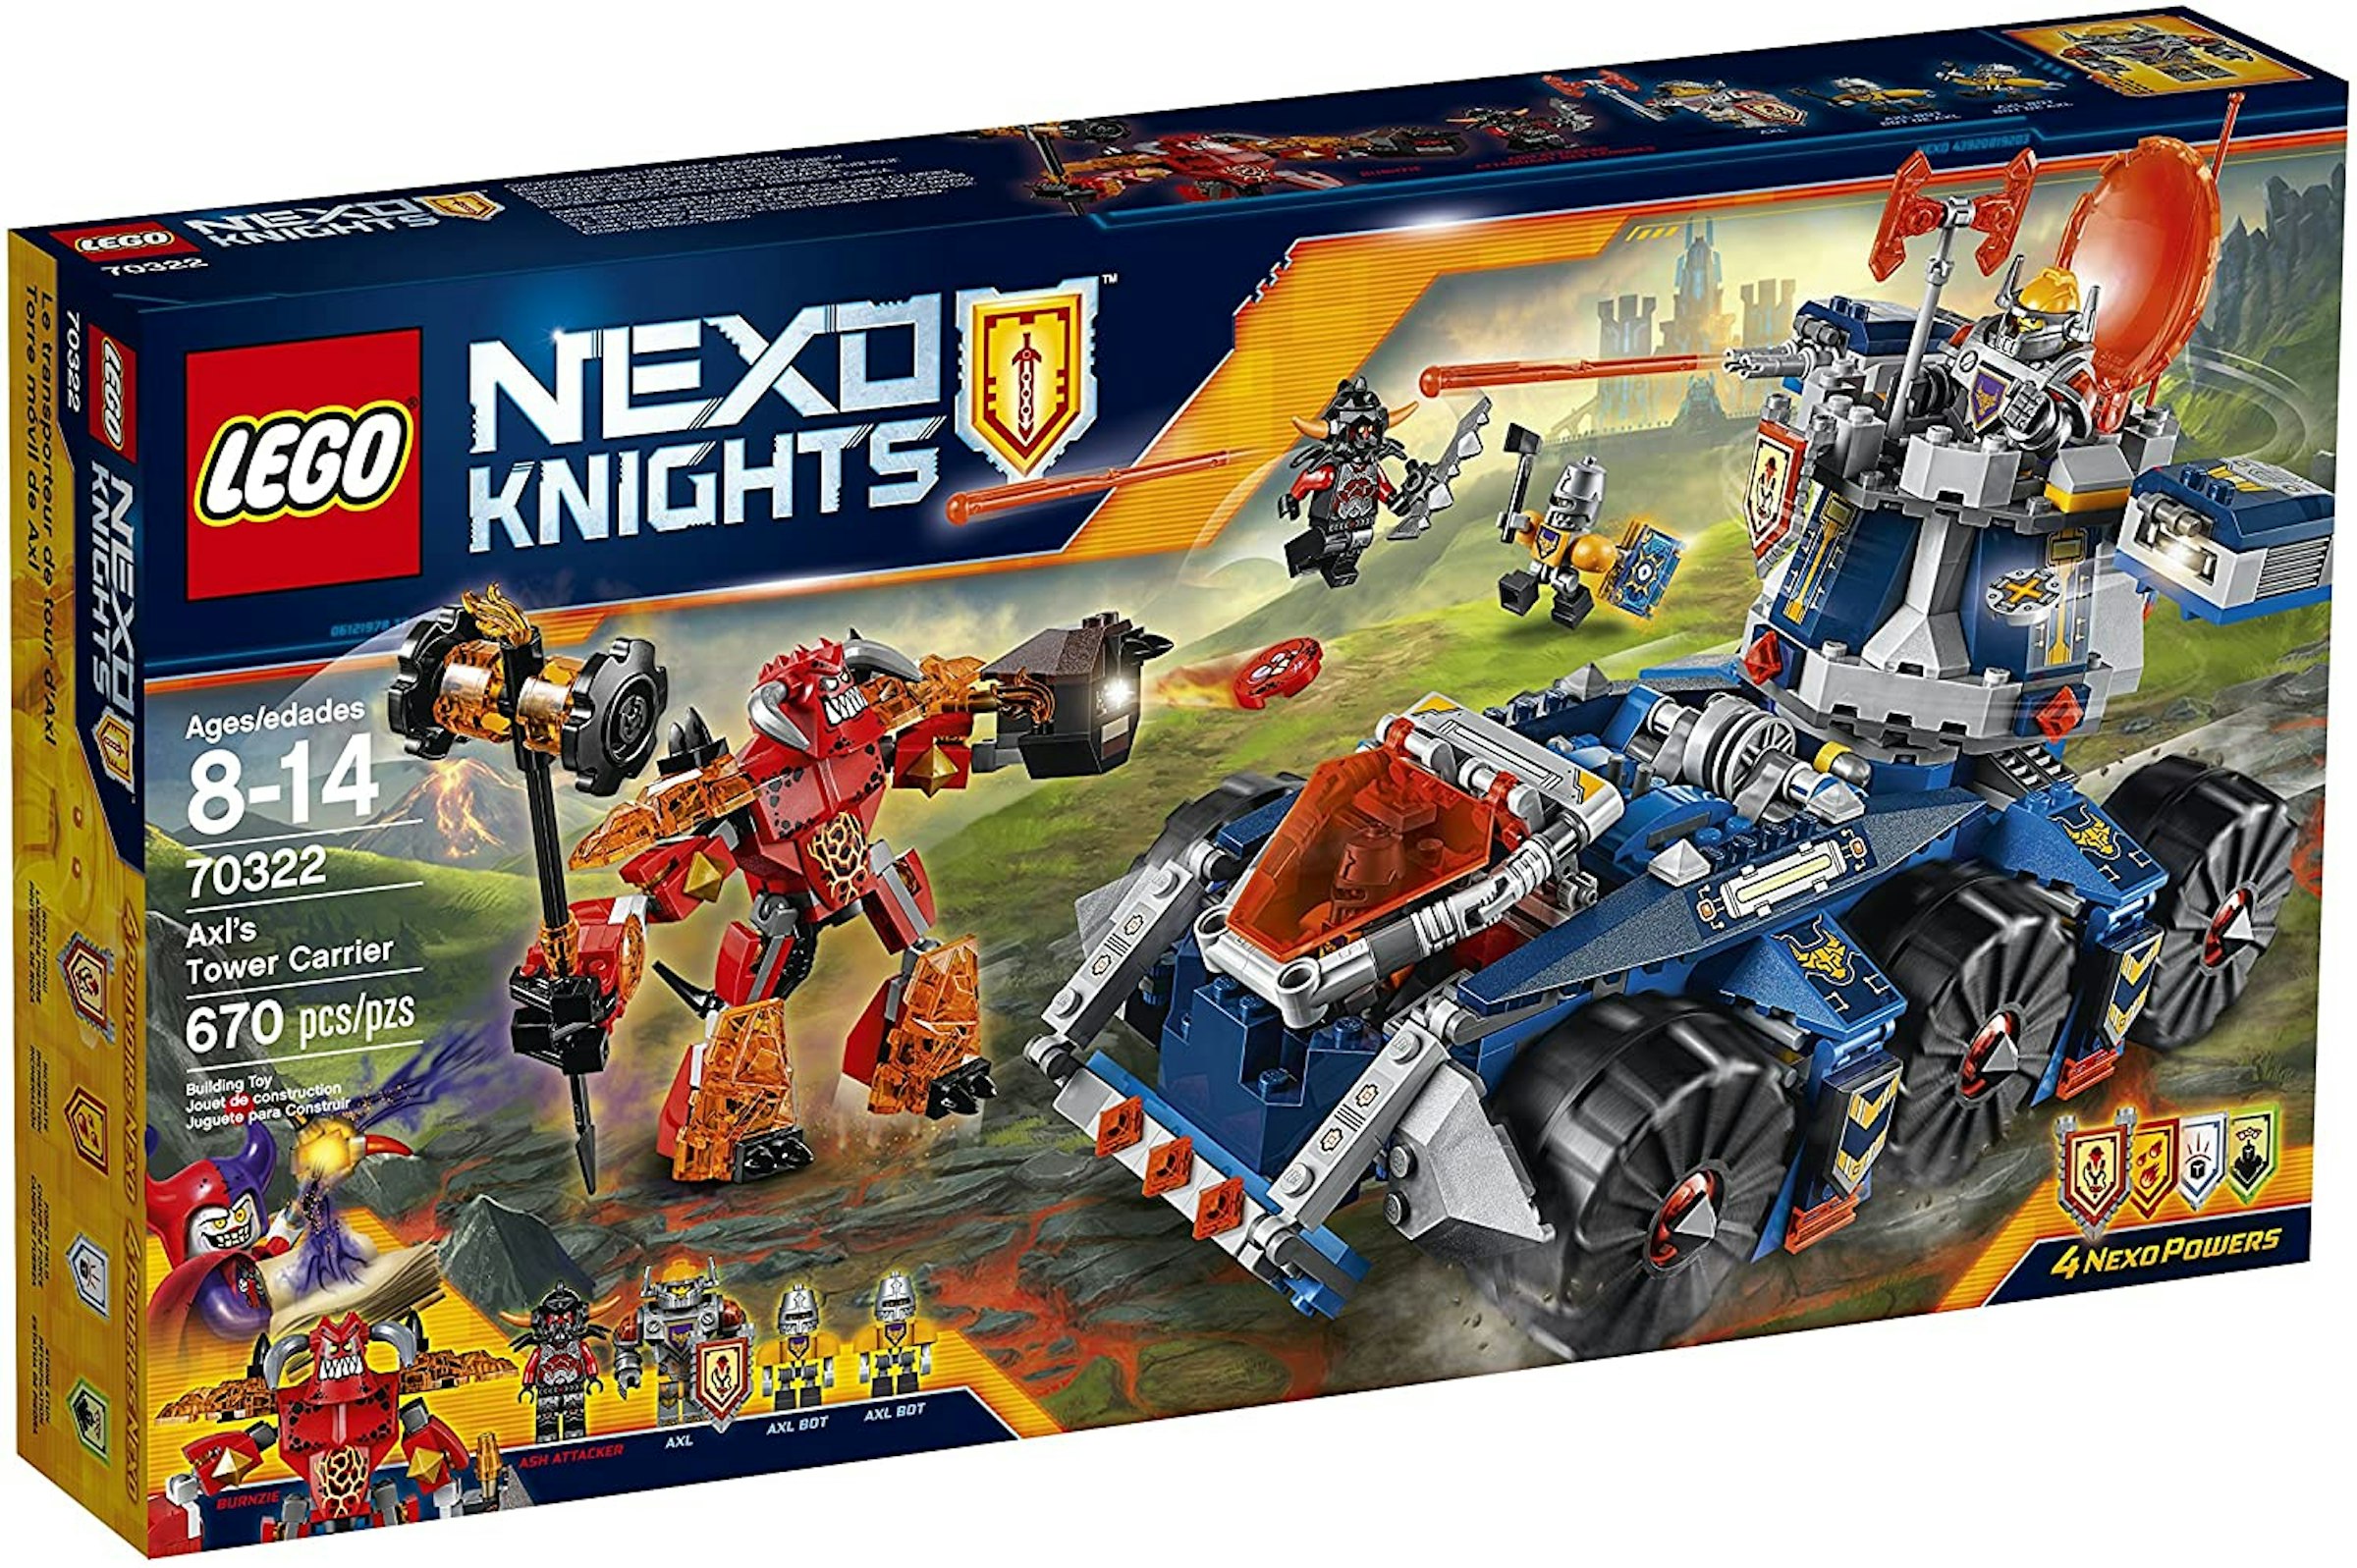 hierarki Rustik historie LEGO Nexo Knights Axl's Tower Carrier Set 70322 - US